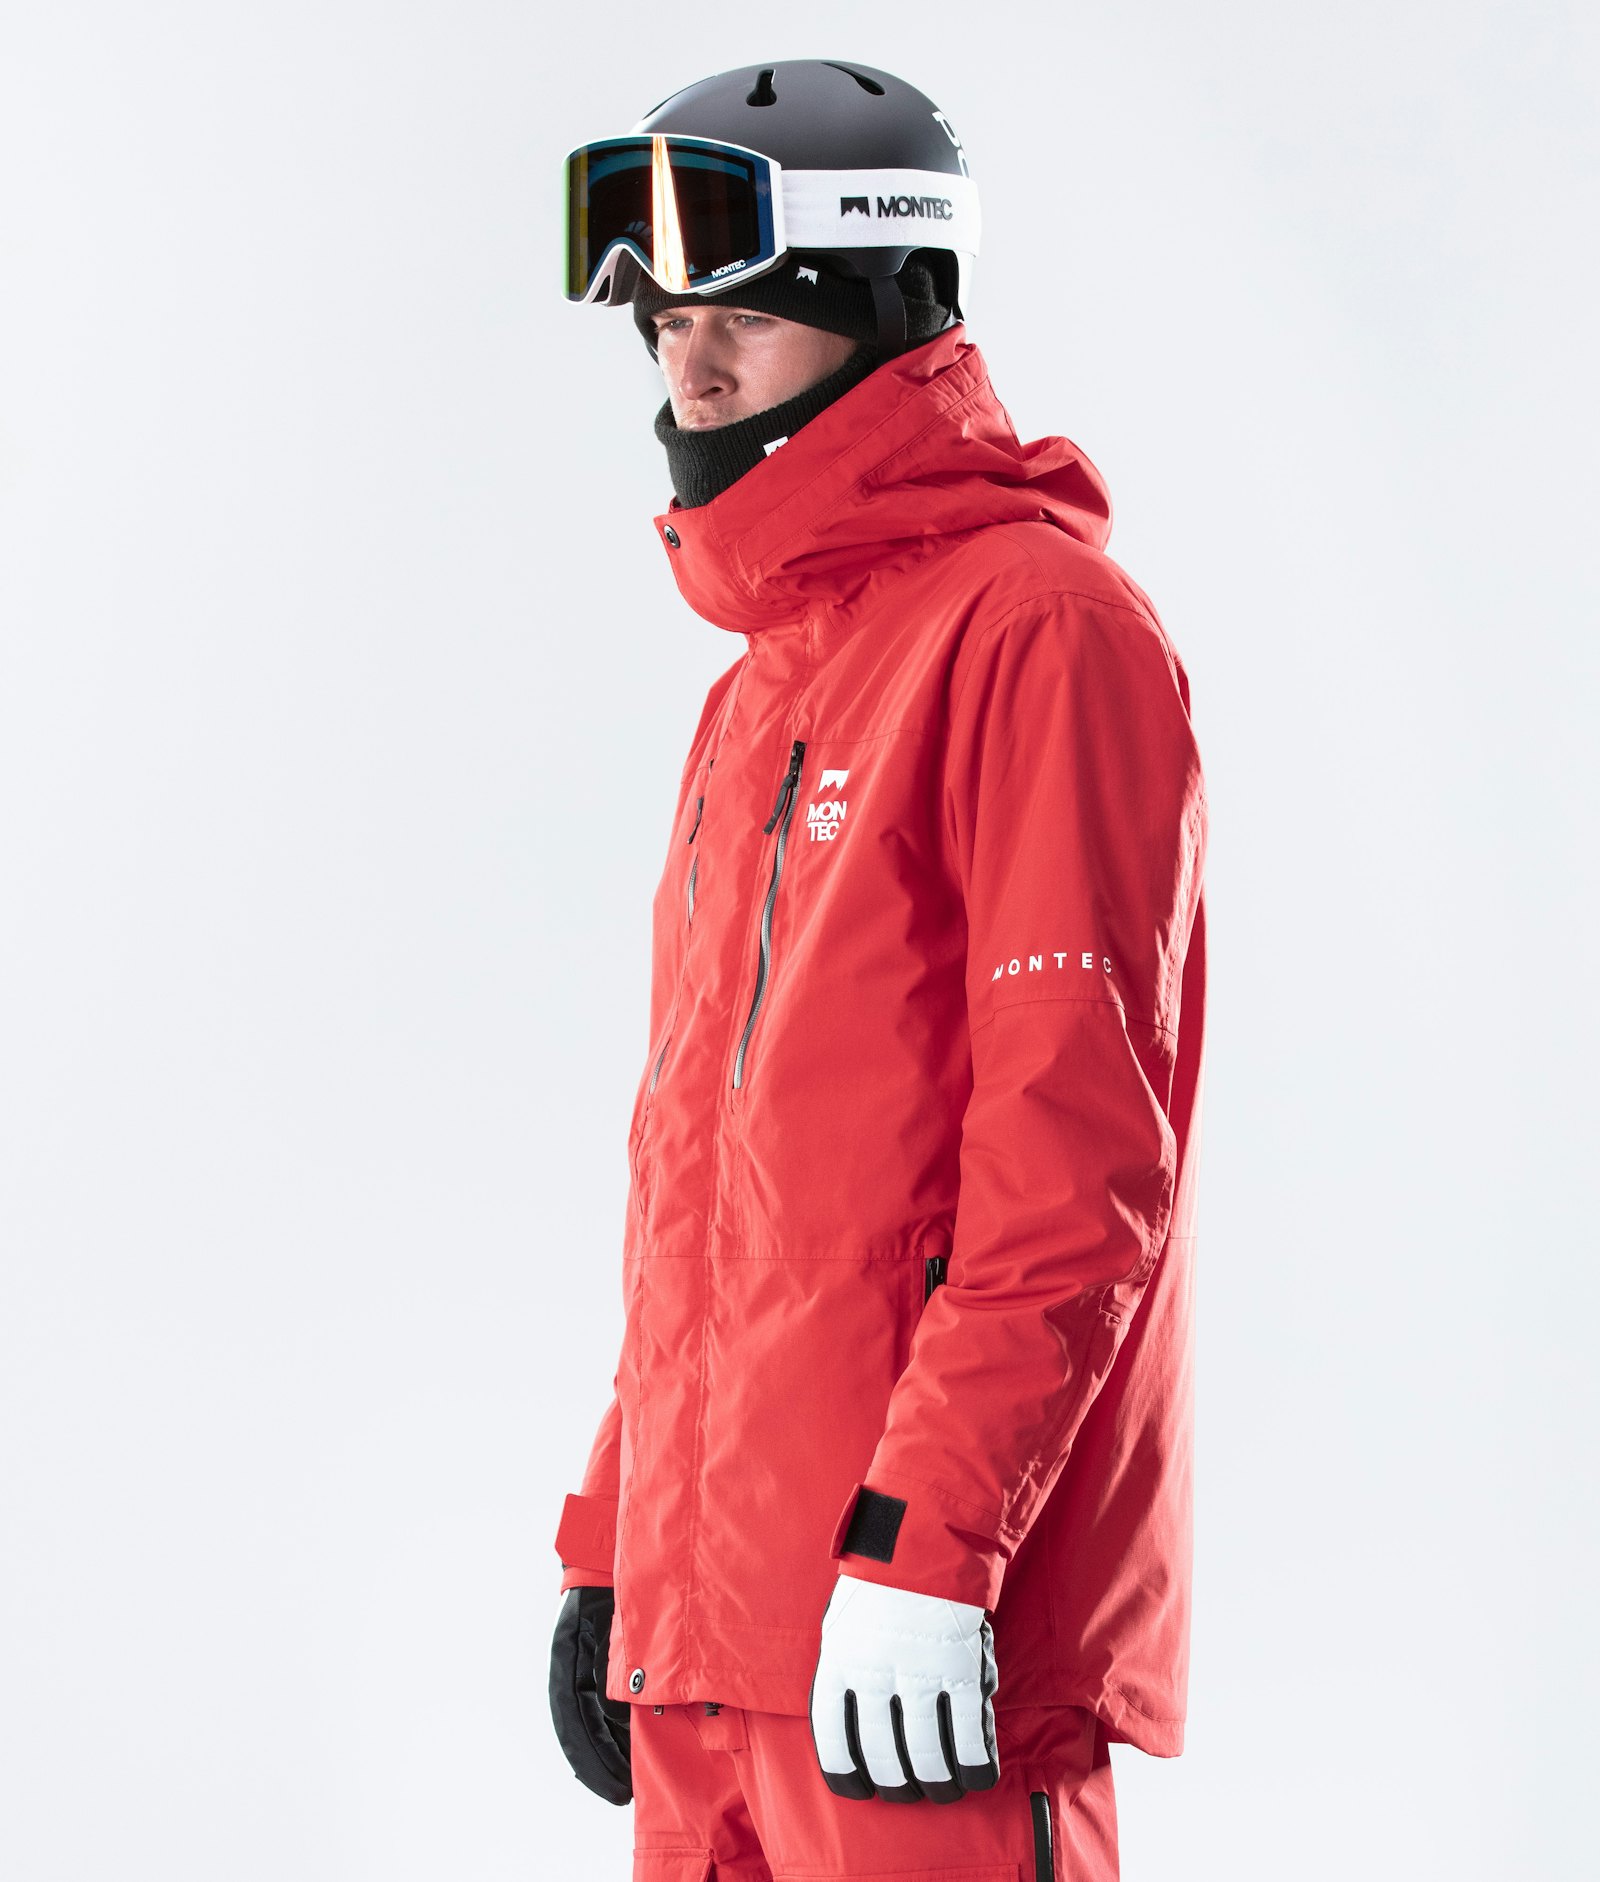 Fawk 2020 Ski jas Heren Red